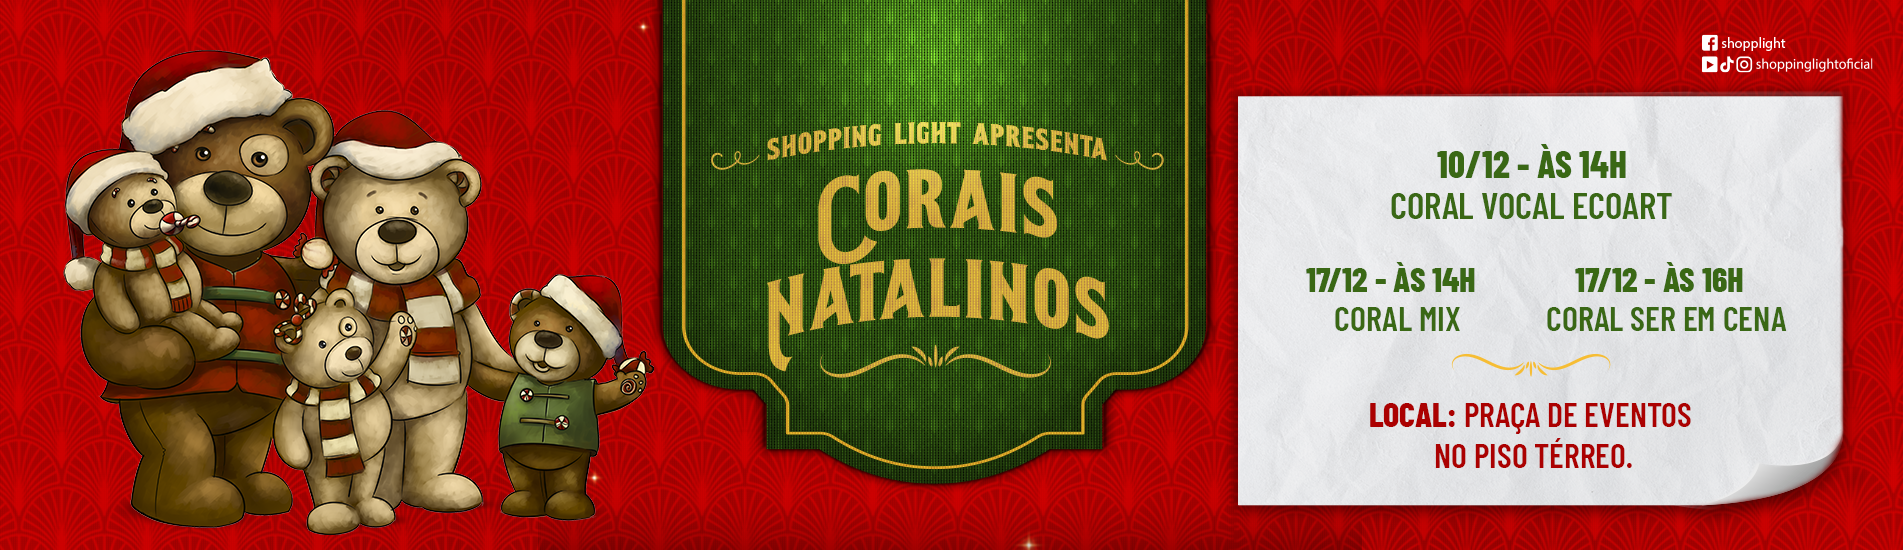 Corais Natalinos no Shopping Light